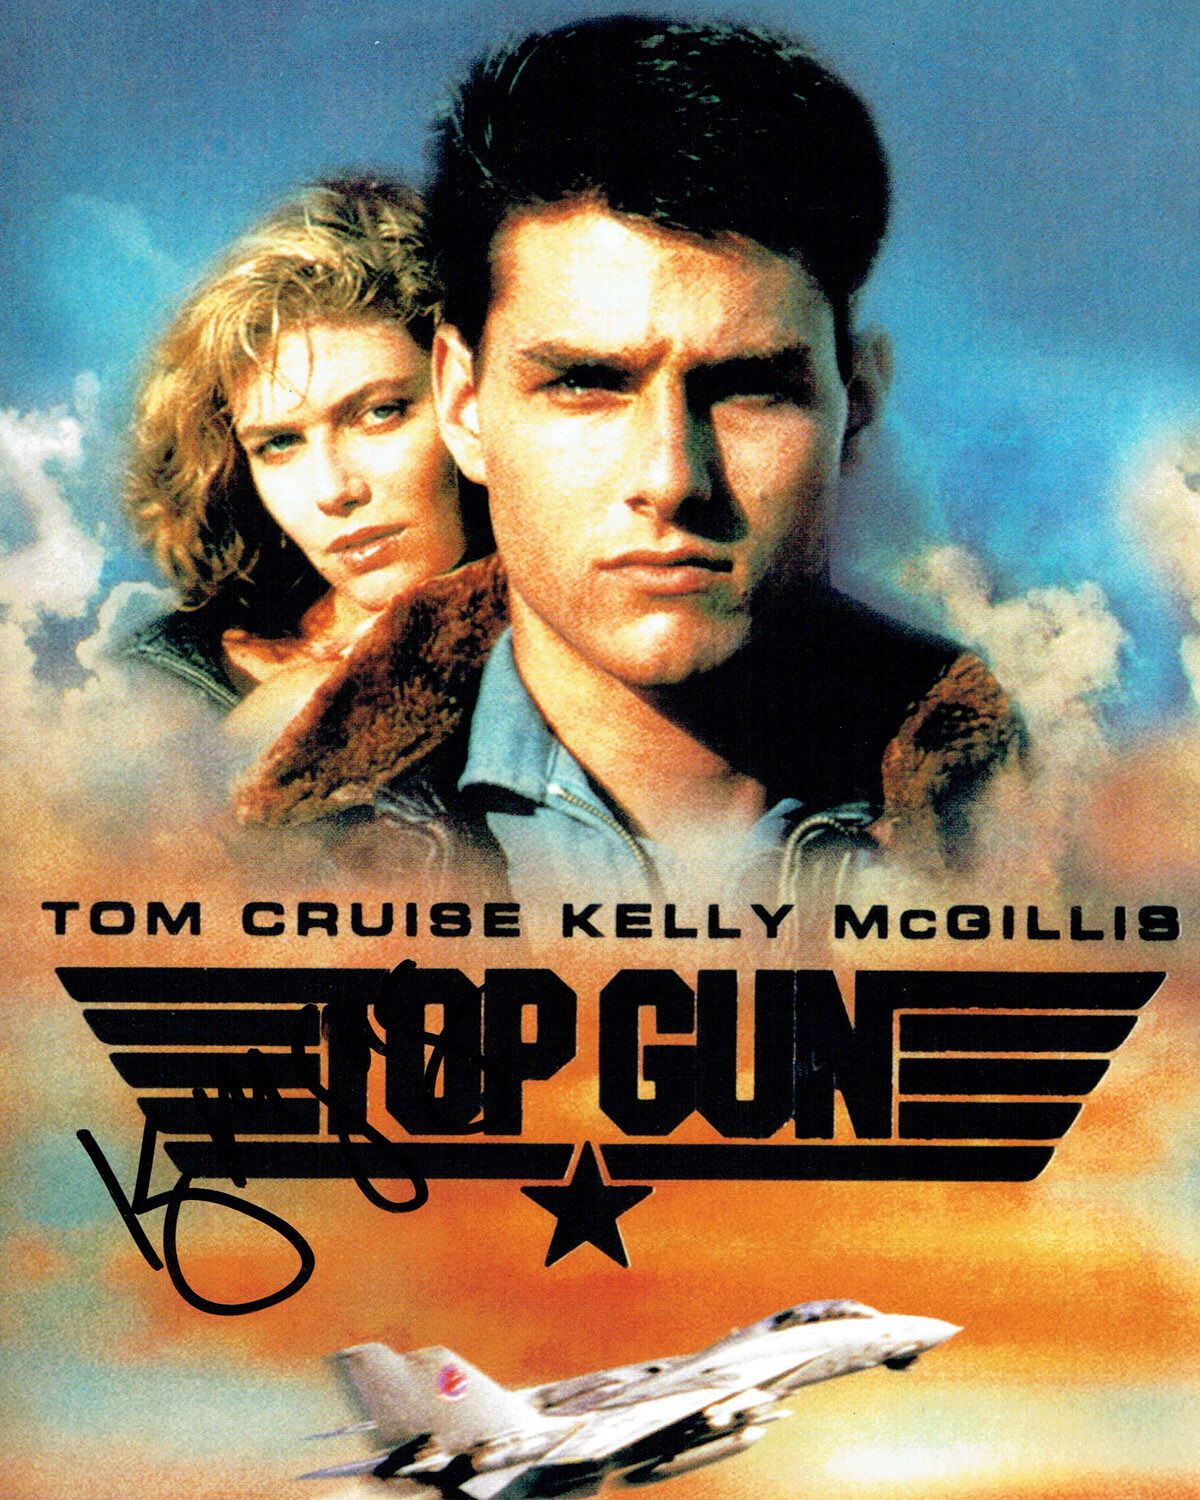 Kelly McGILLIS American Actress SIGNED 10x8 Top Gun Photo Poster painting AFTAL Autograph COA